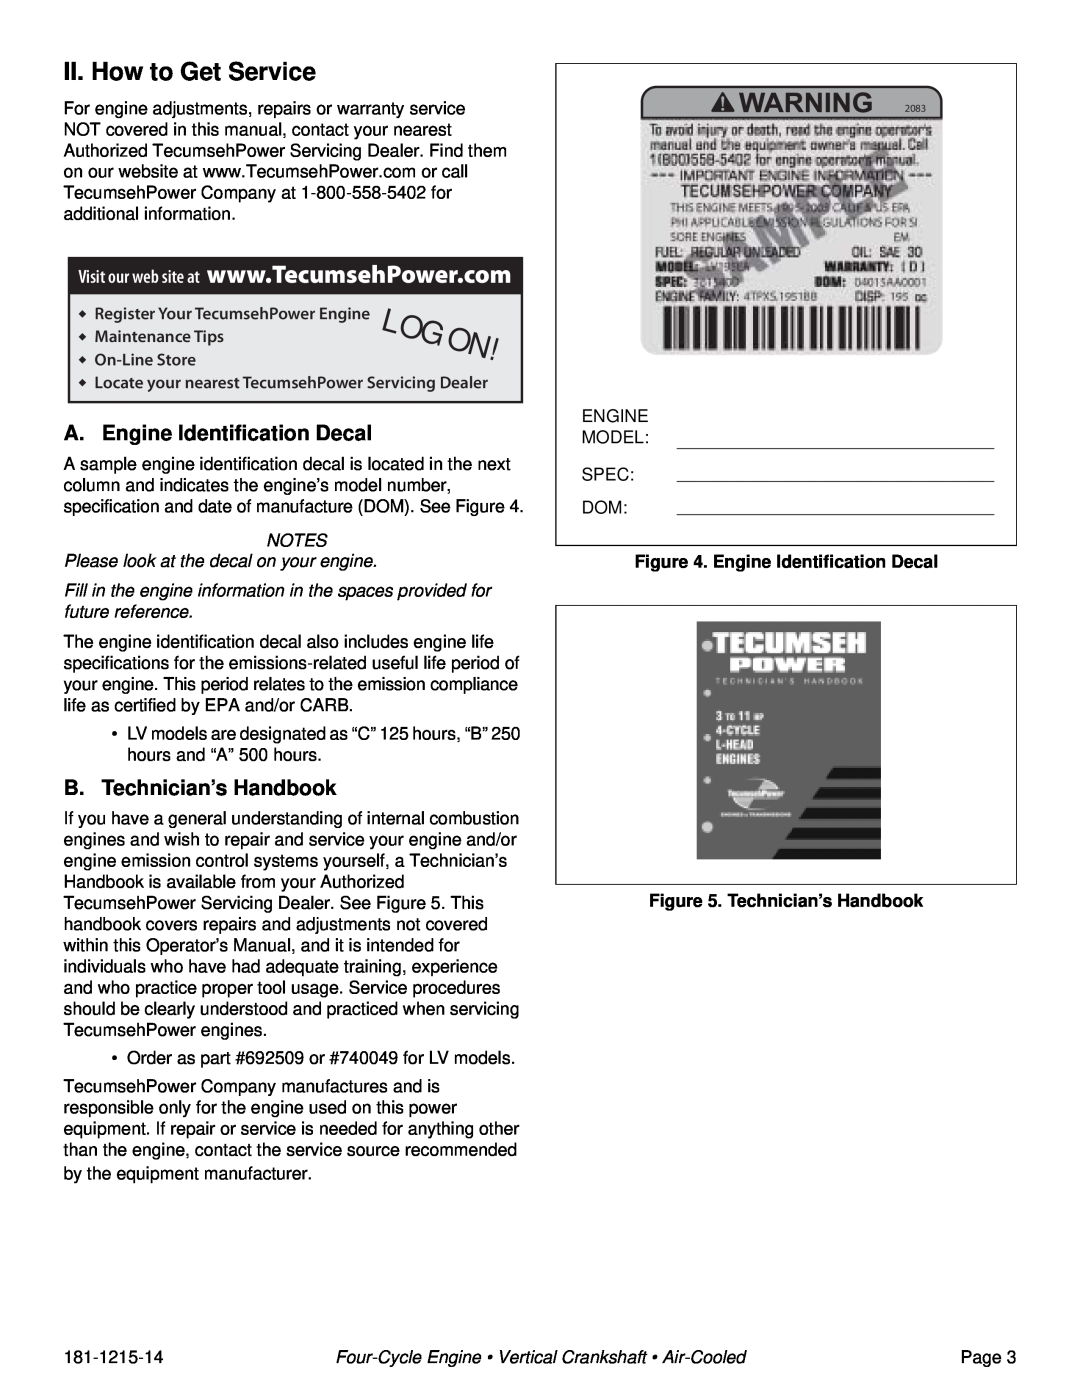 Tecumseh LV156XA II. How to Get Service, A. Engine Identification Decal, B.Technician’s Handbook, Tecumsehpower Company 